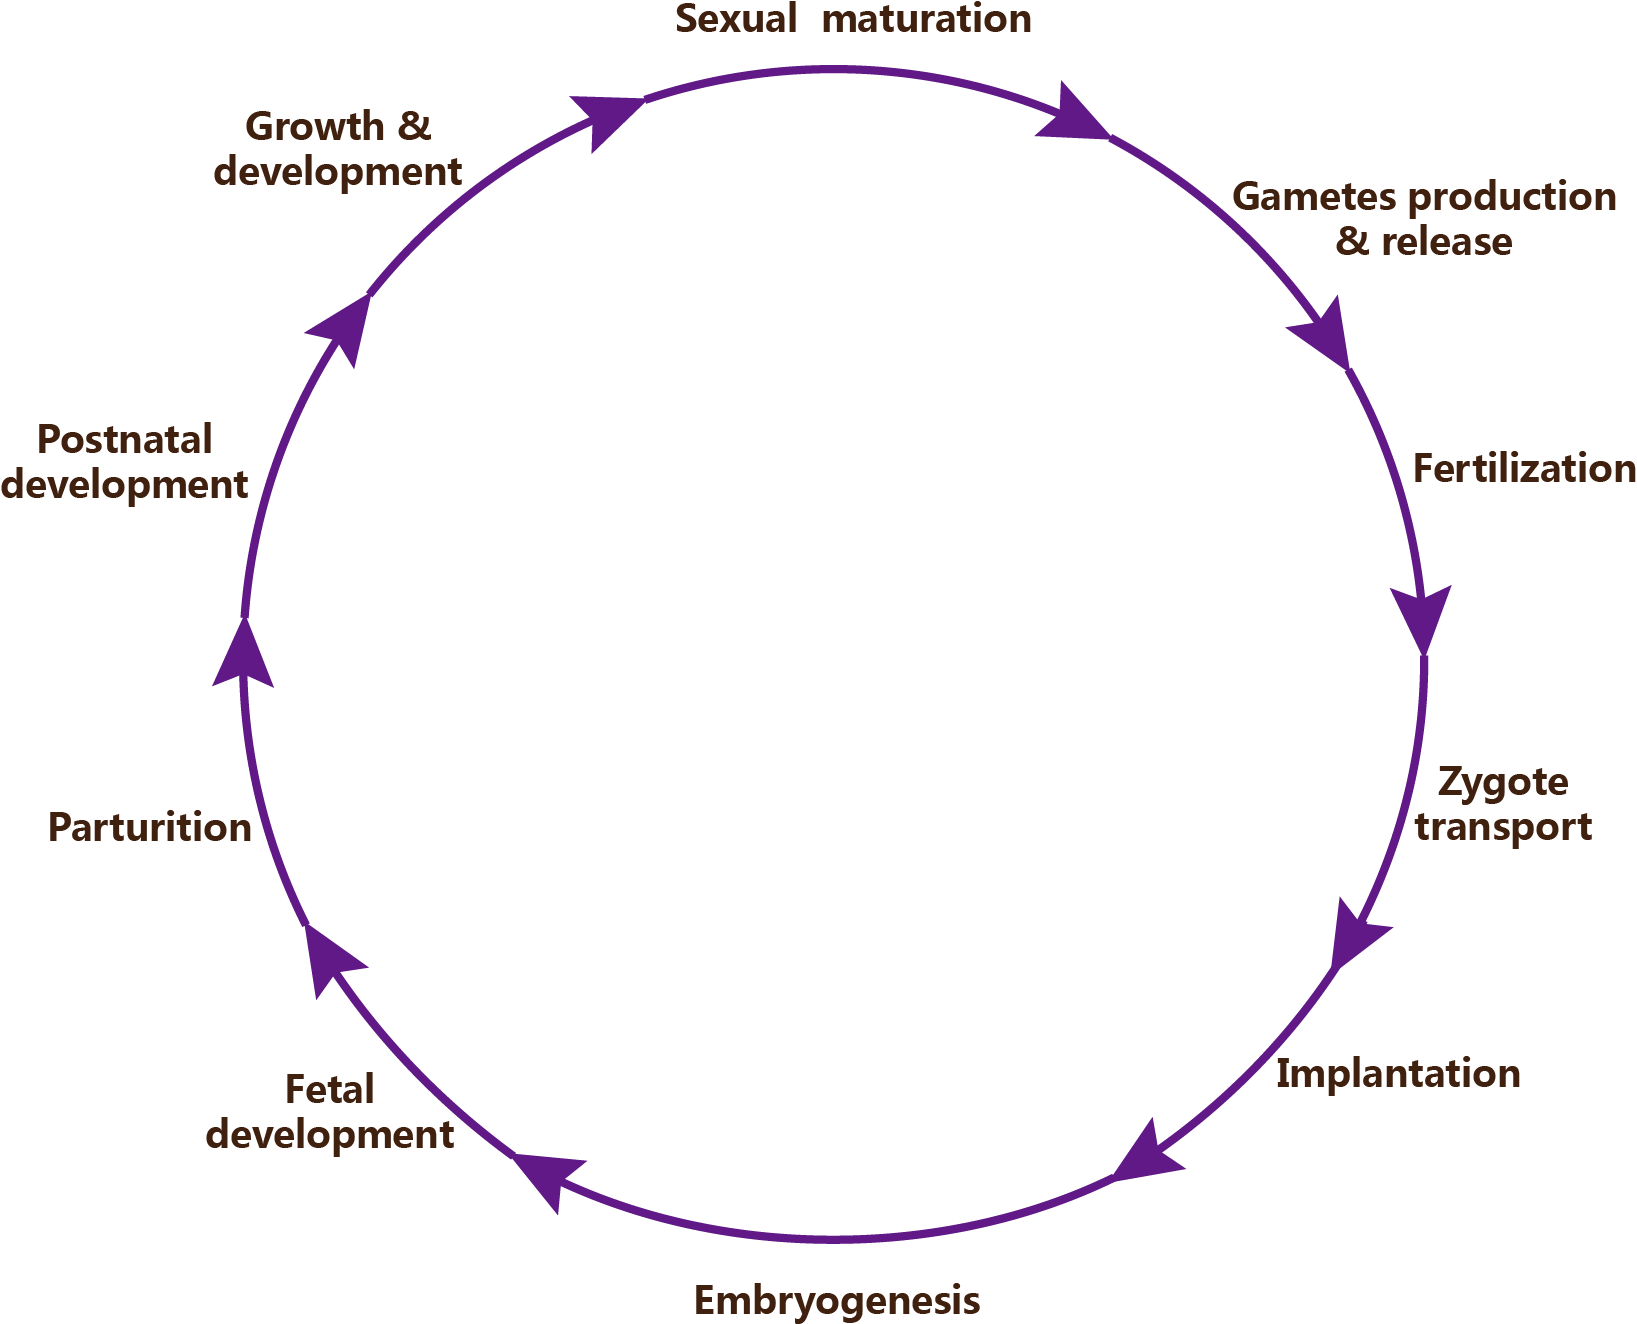 The reproductive cycle of mammalian